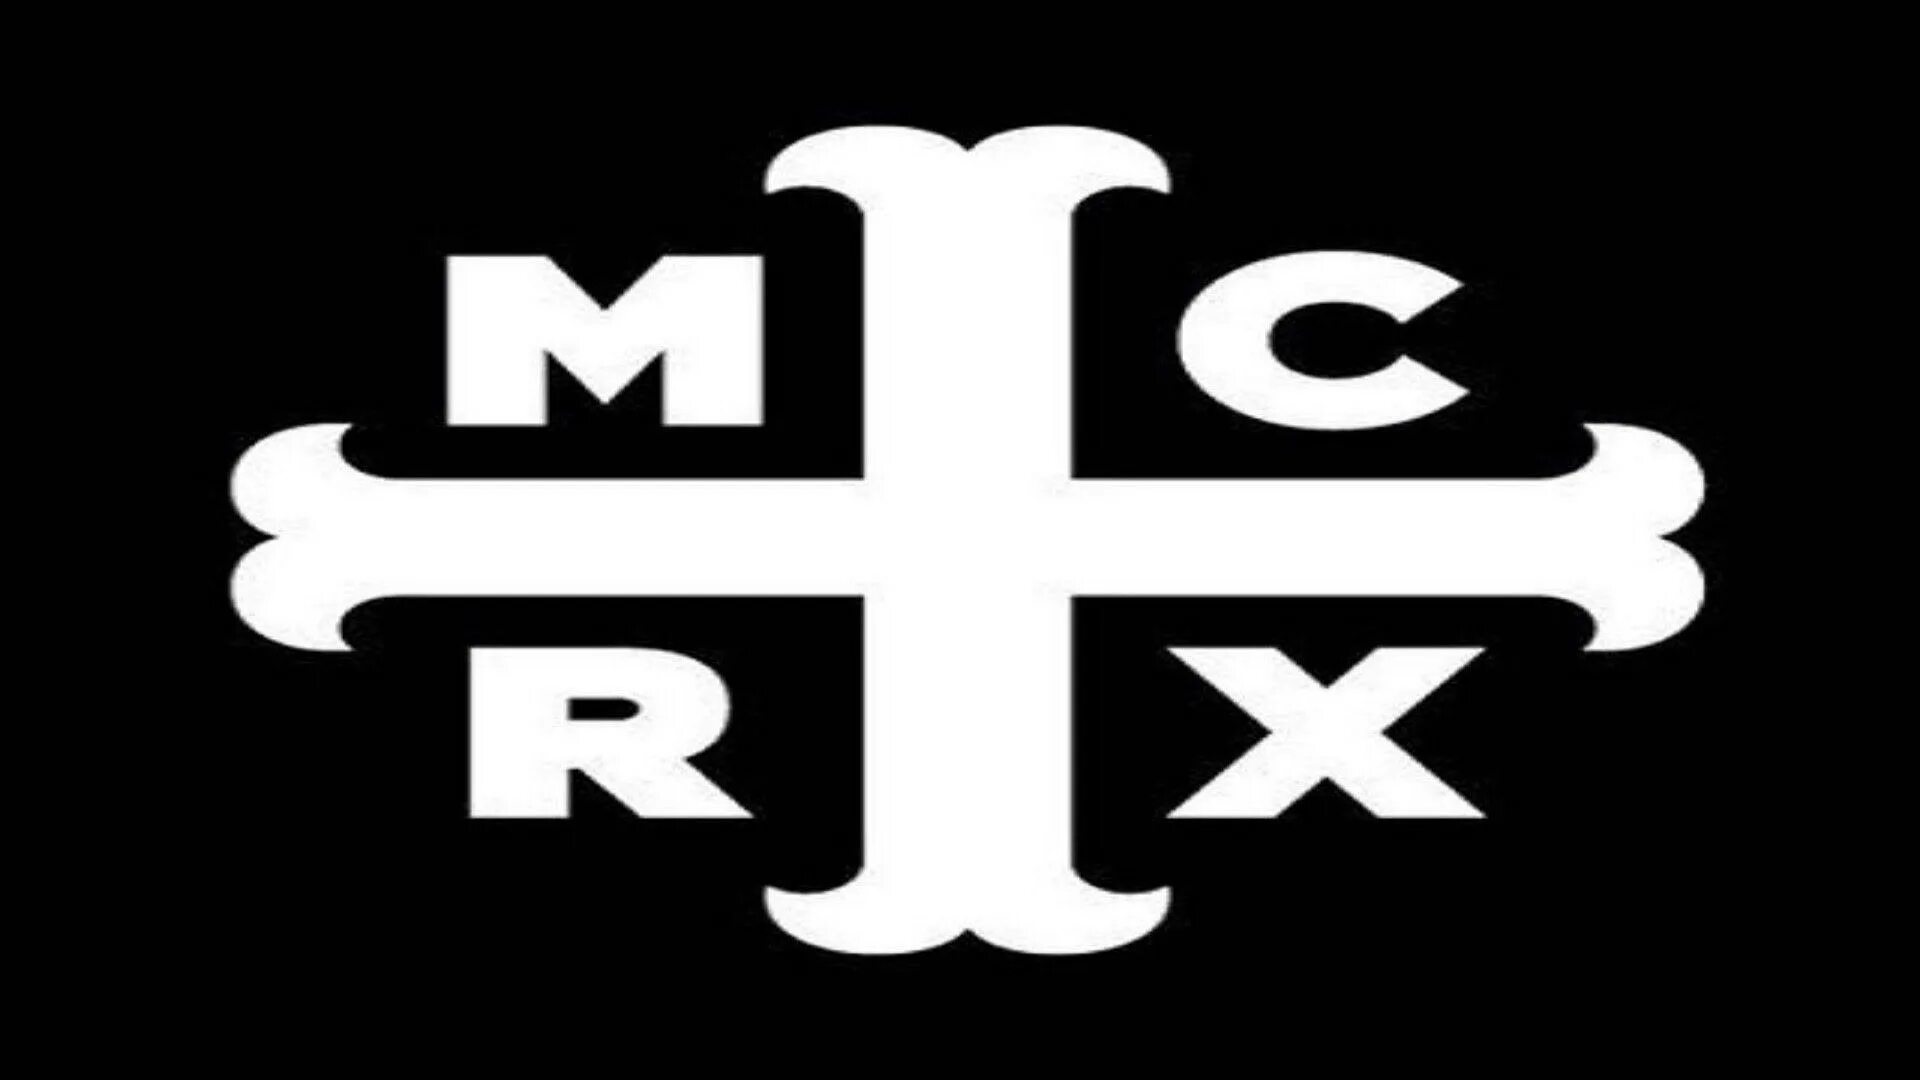 13 c a r d. Логотип x. Логотип MCRX. Логотип m c r x. RX лого.